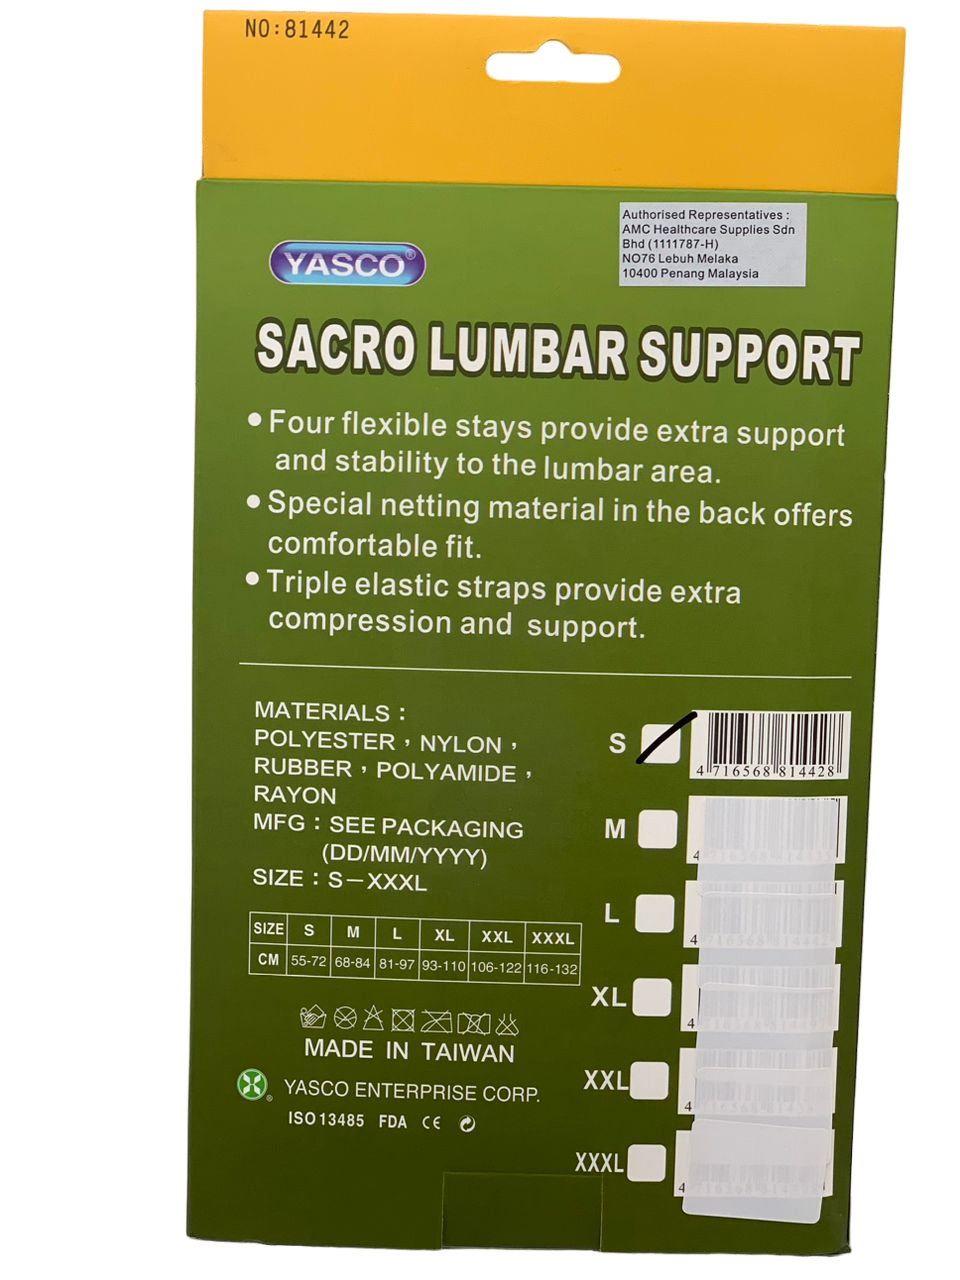 YASCO Sacro Lumbar Support 1's